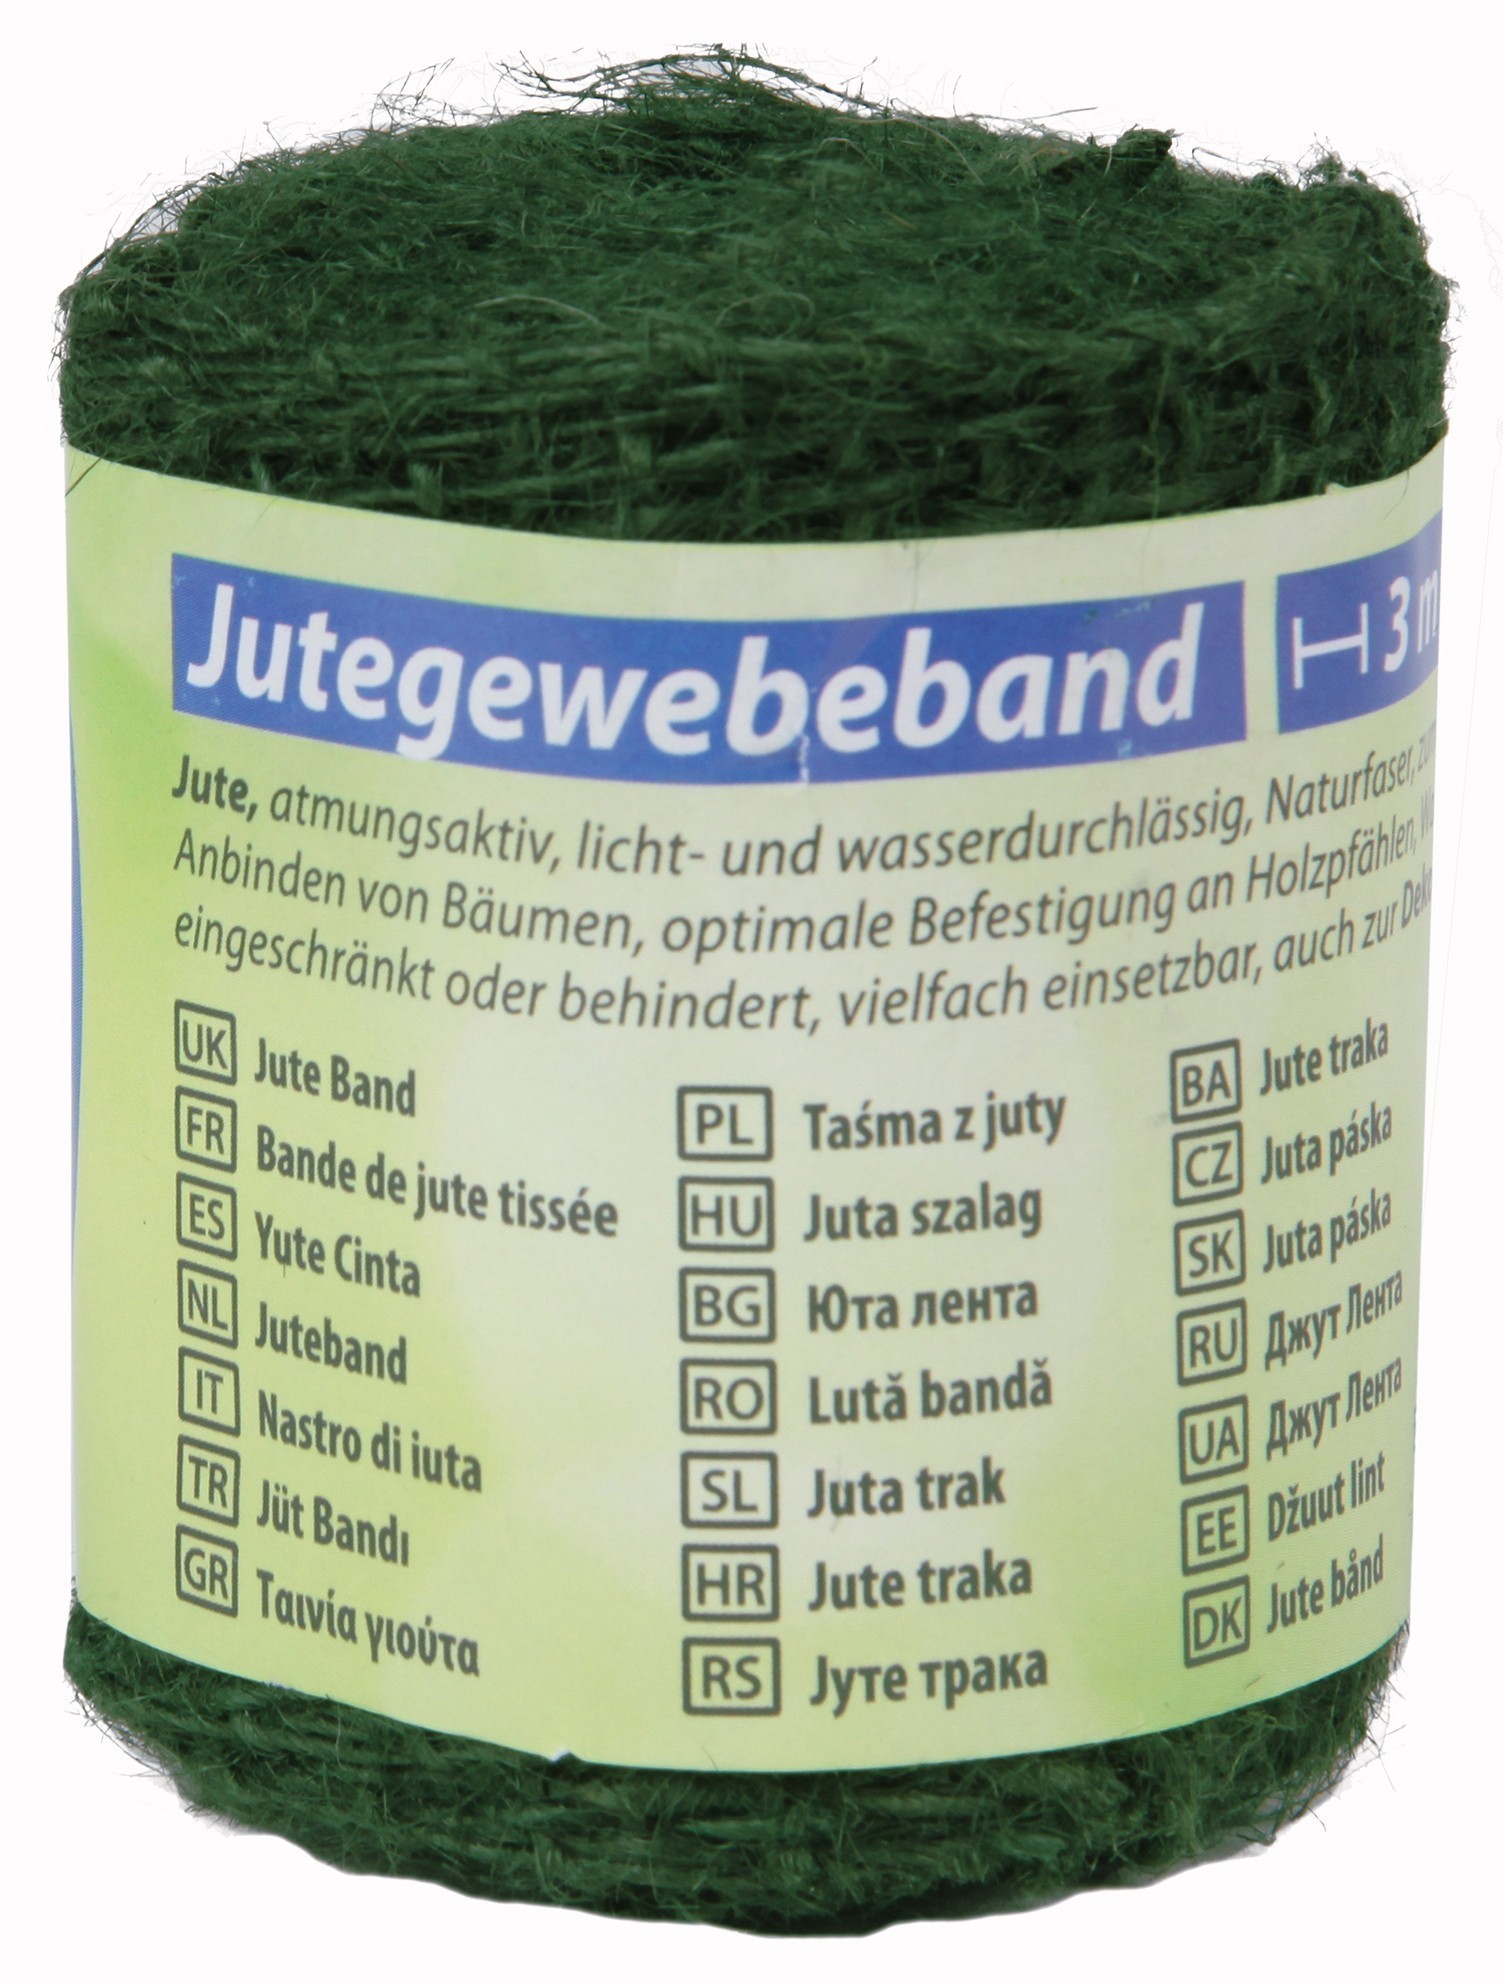 Jute Gewebeband / Dekoband classic floraworld 3x0,6m dunkelgrün